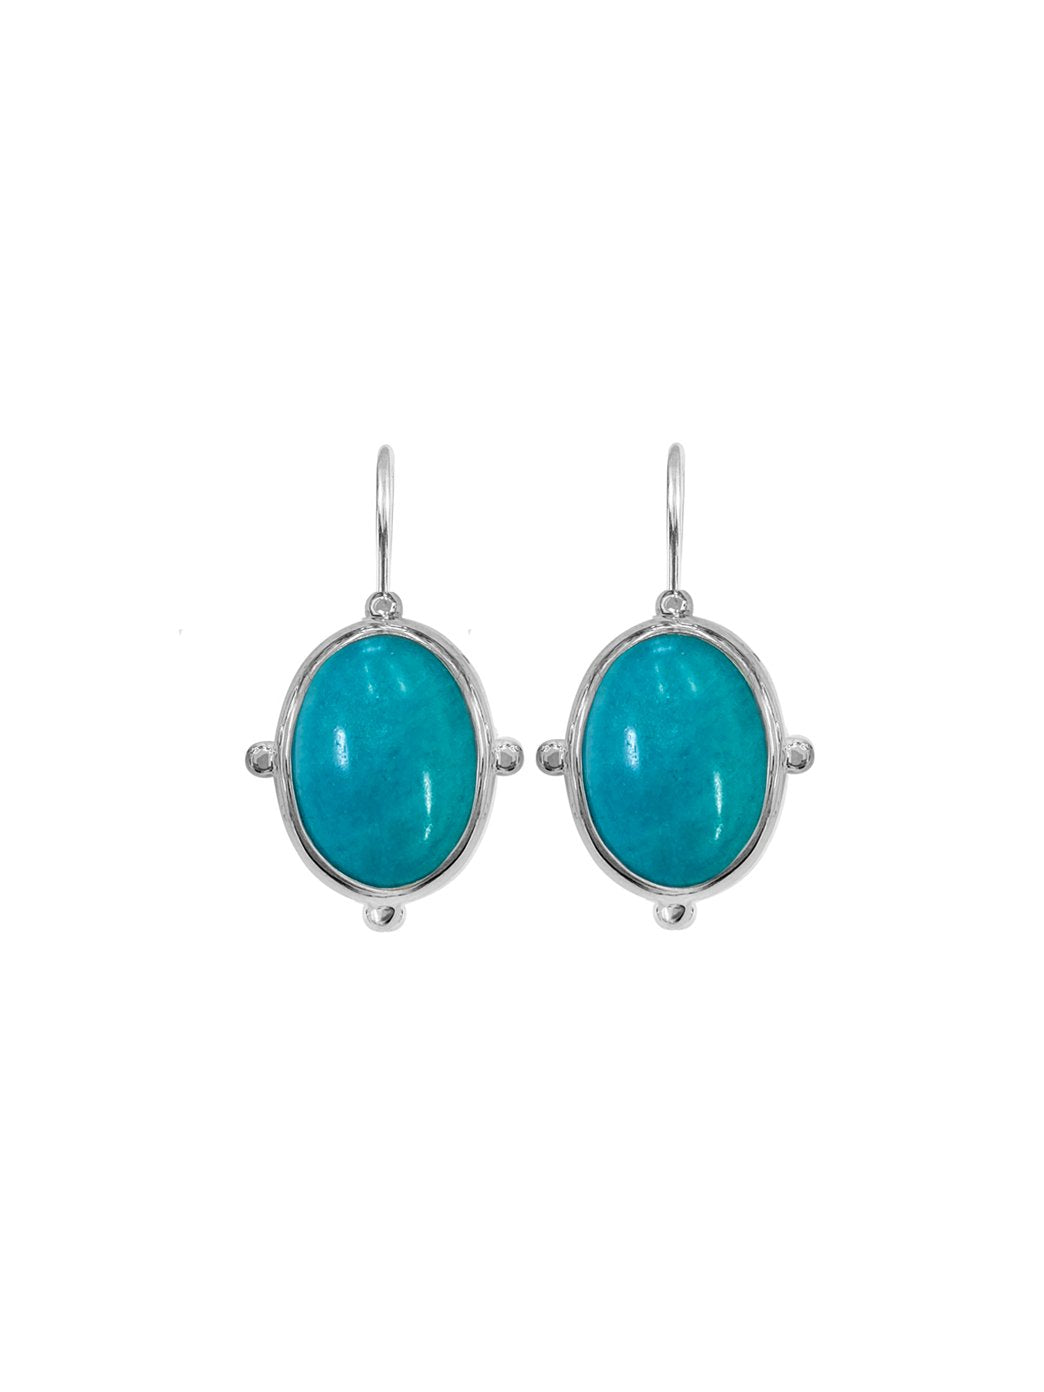 Oval Button Earrings - Amazonite